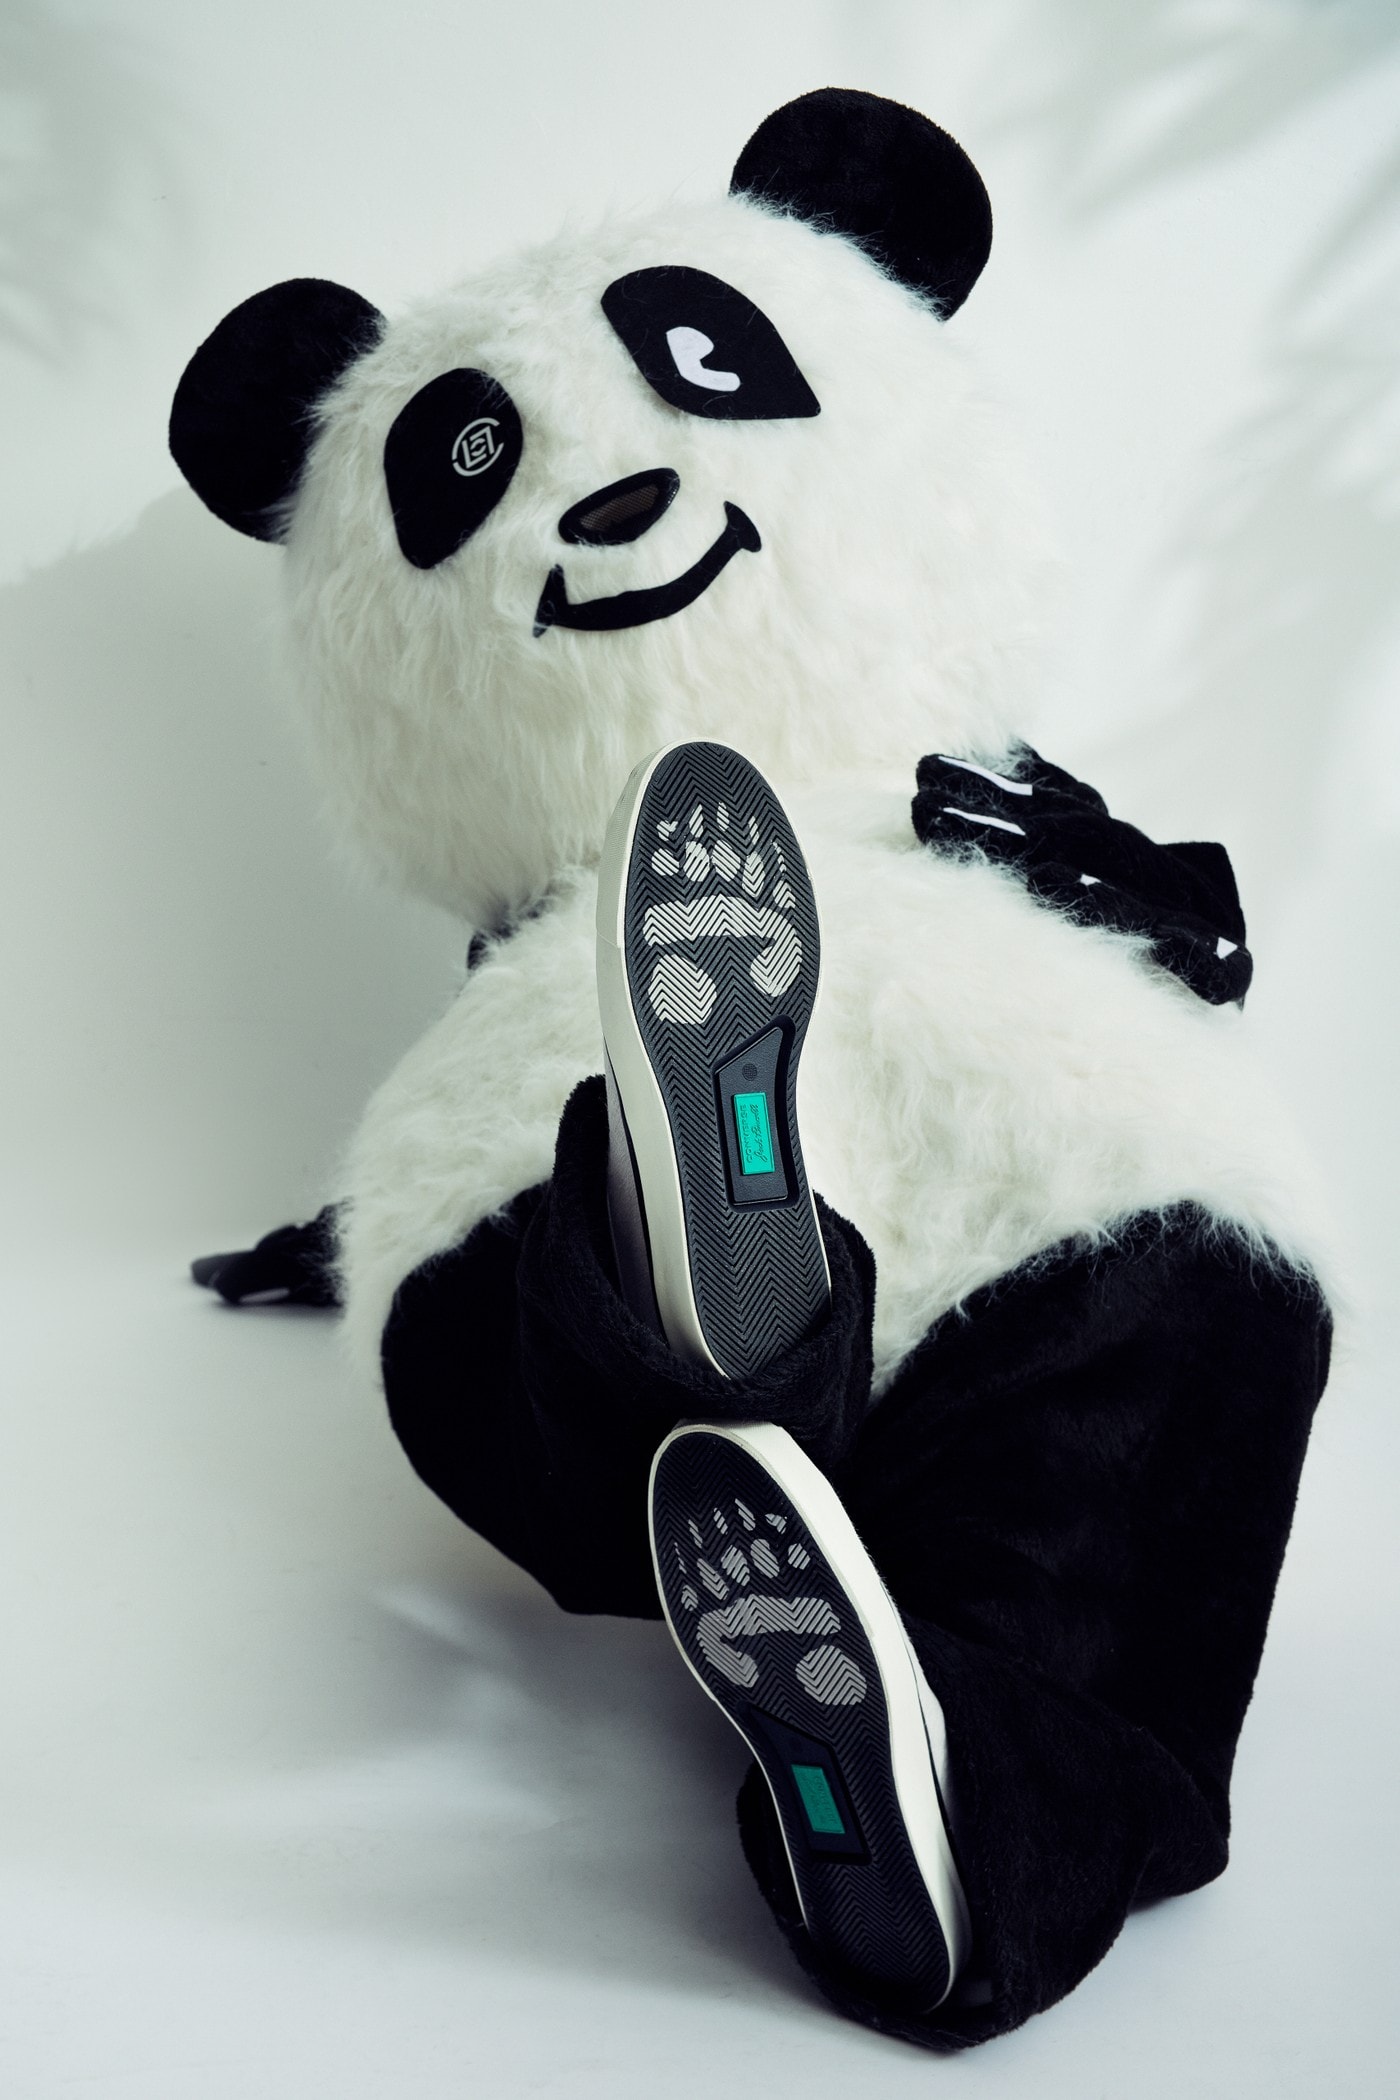 CLOT x CONVERSE 最新聯名系列「Panda Pack」正式登場